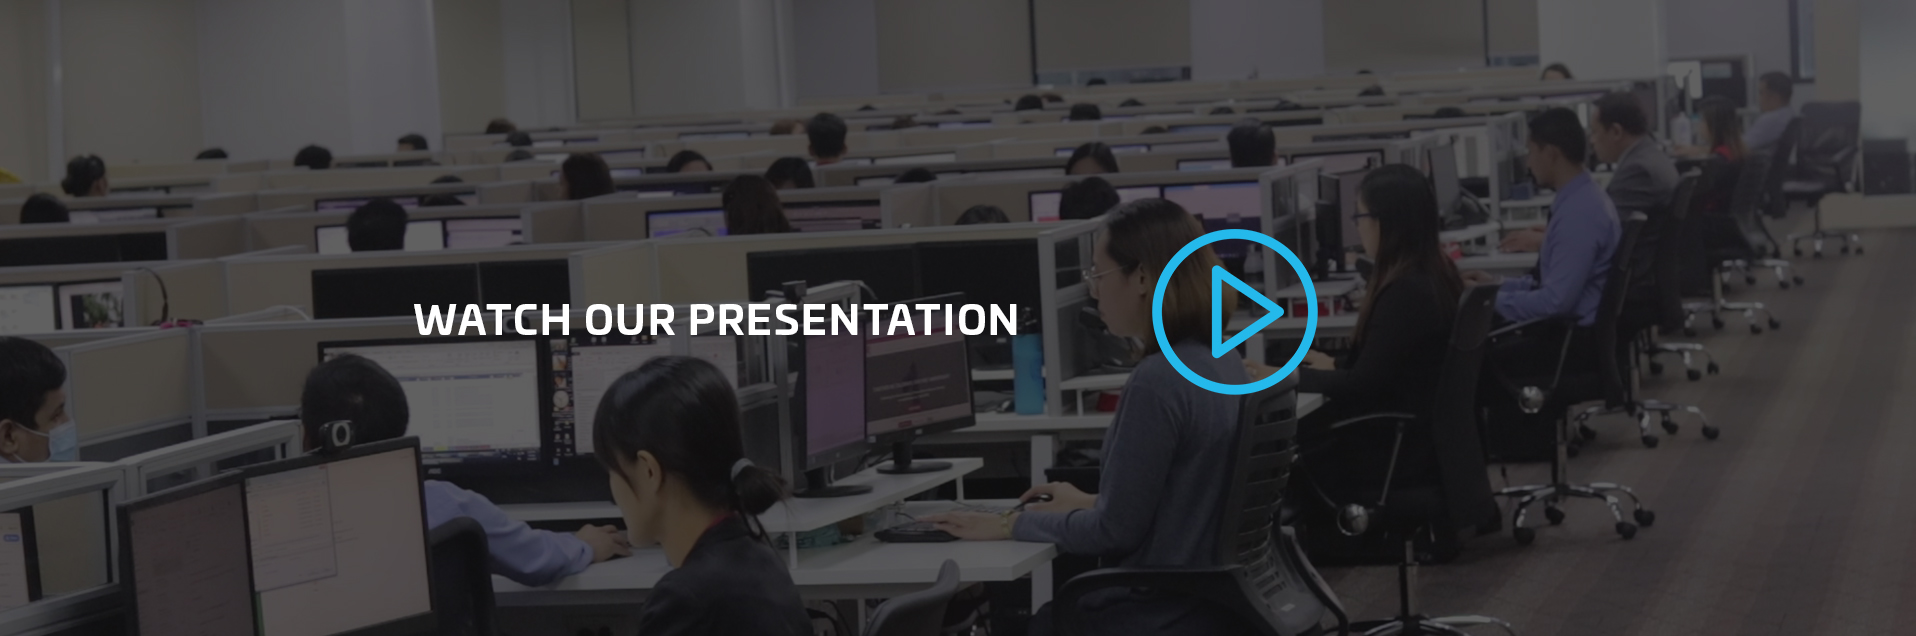 Watch our Presentation